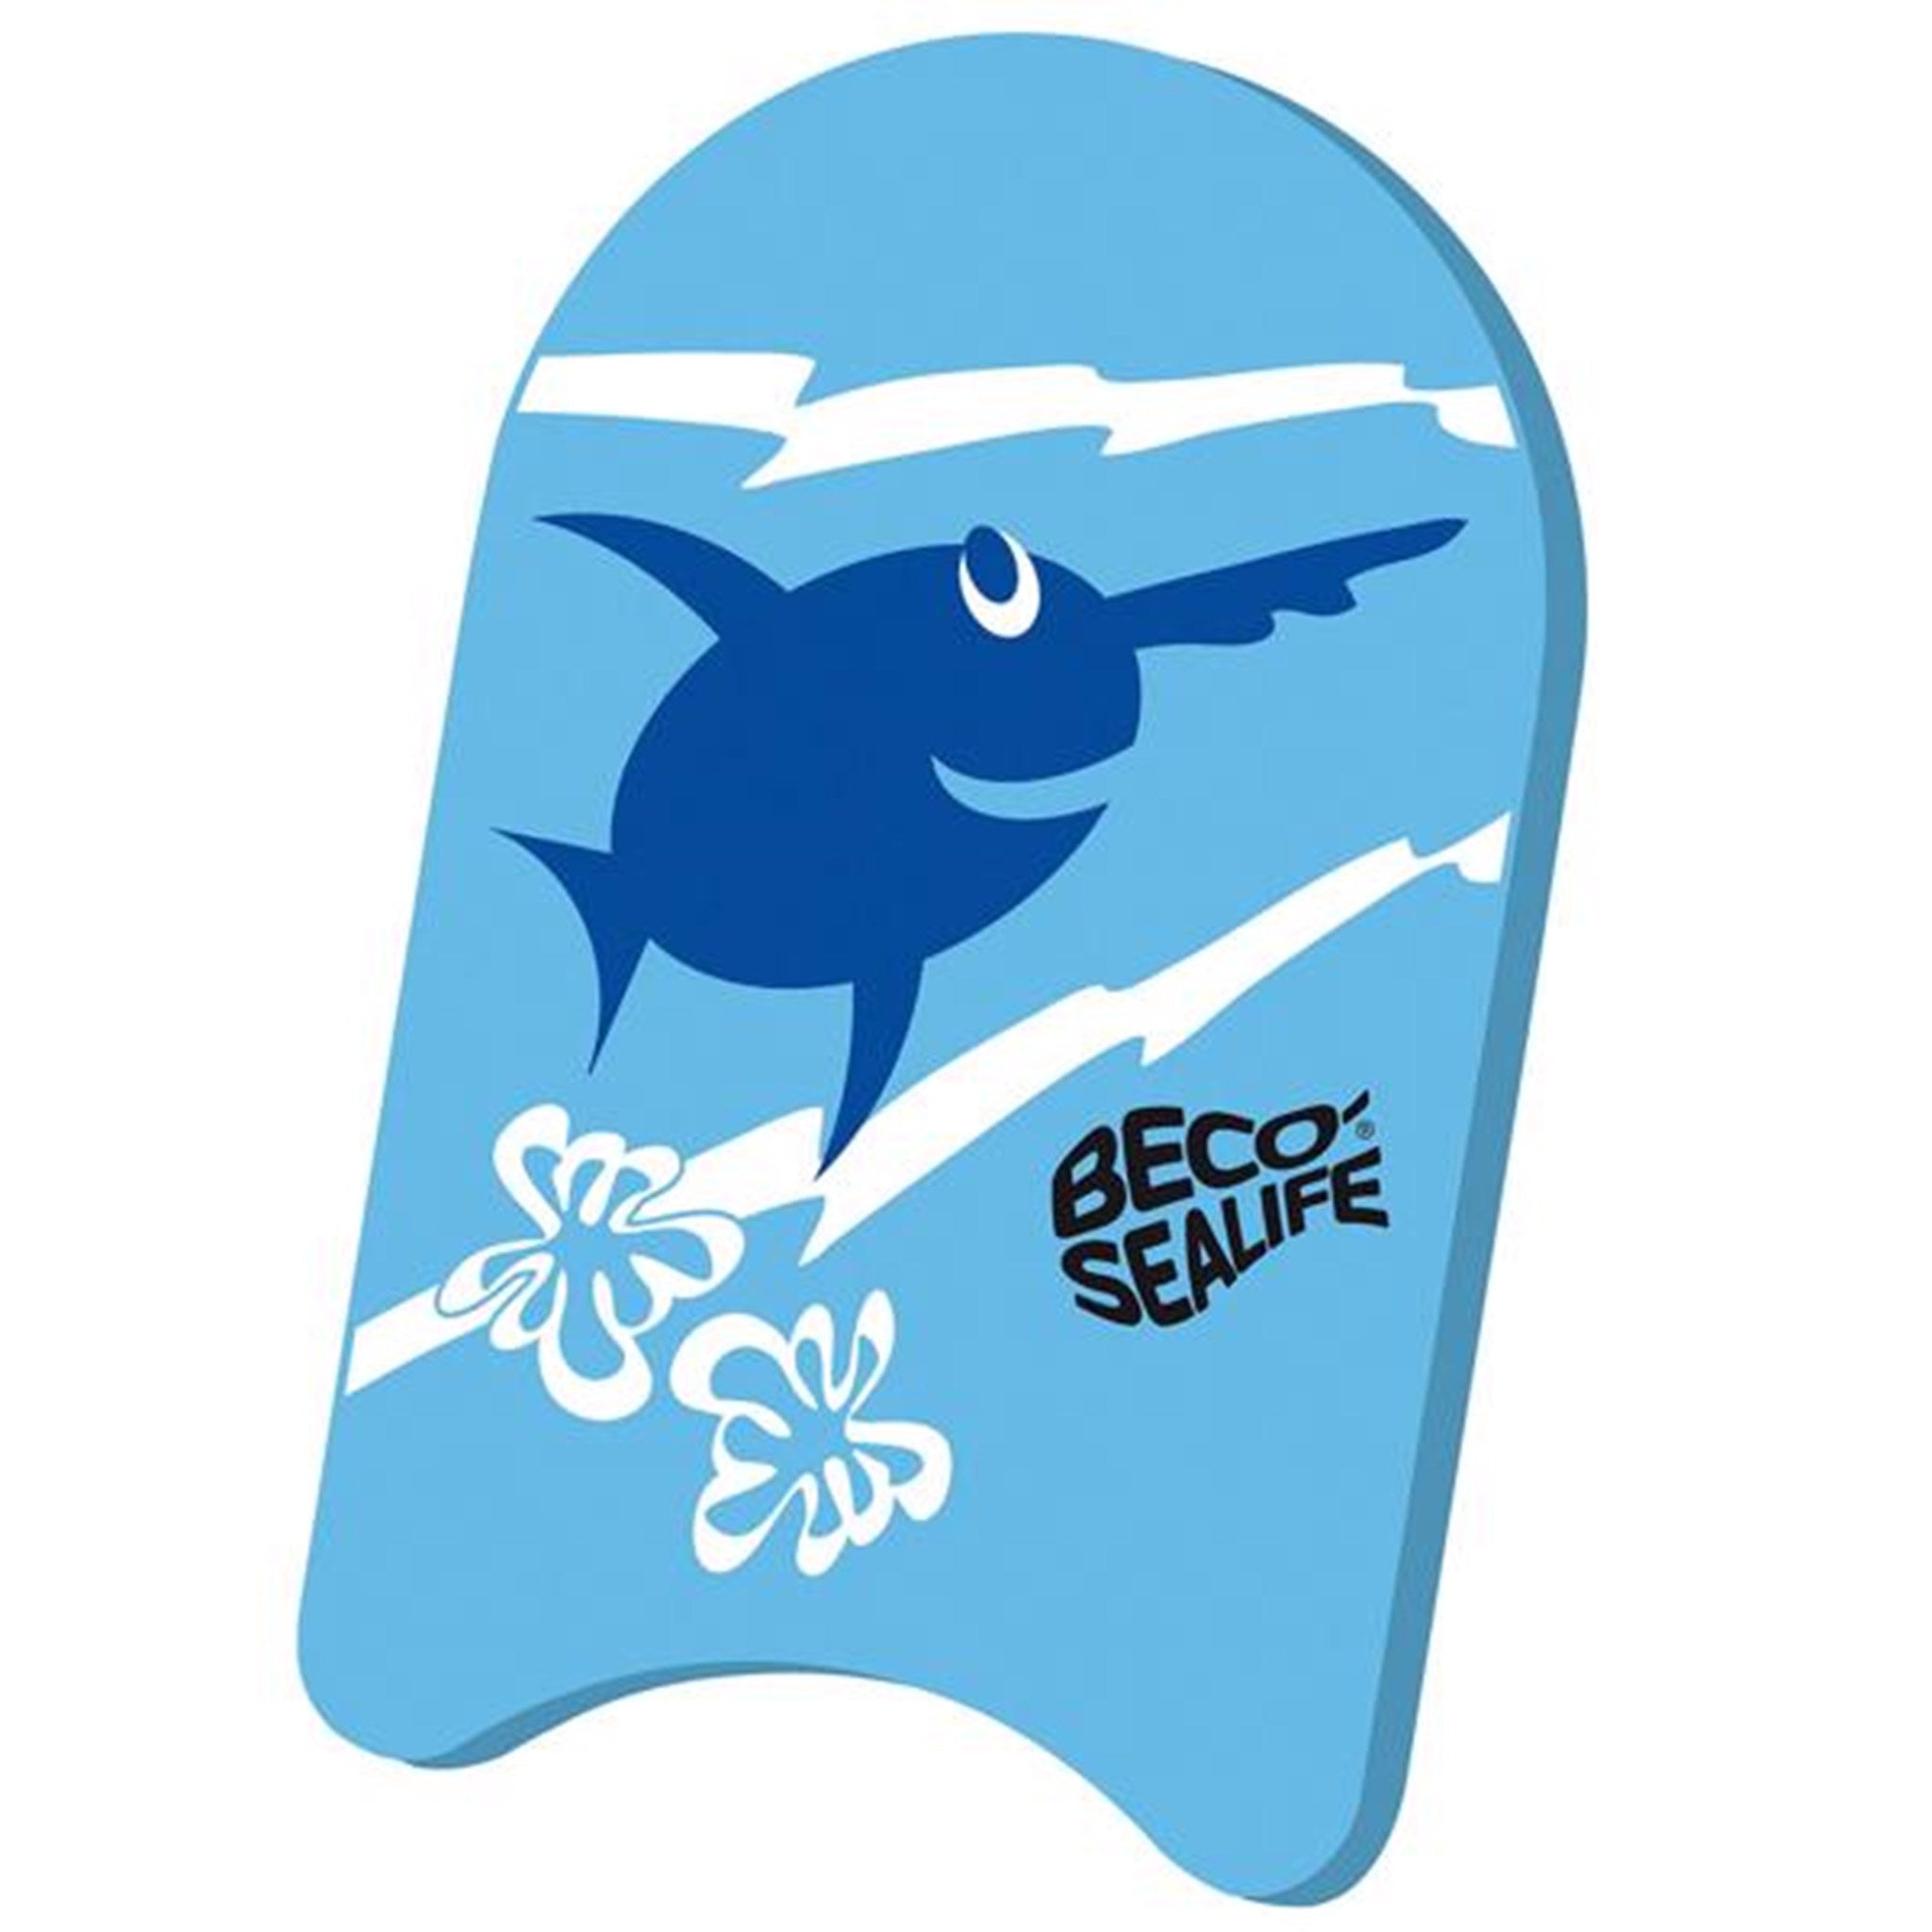 BECO Sealife Kick Board Blue